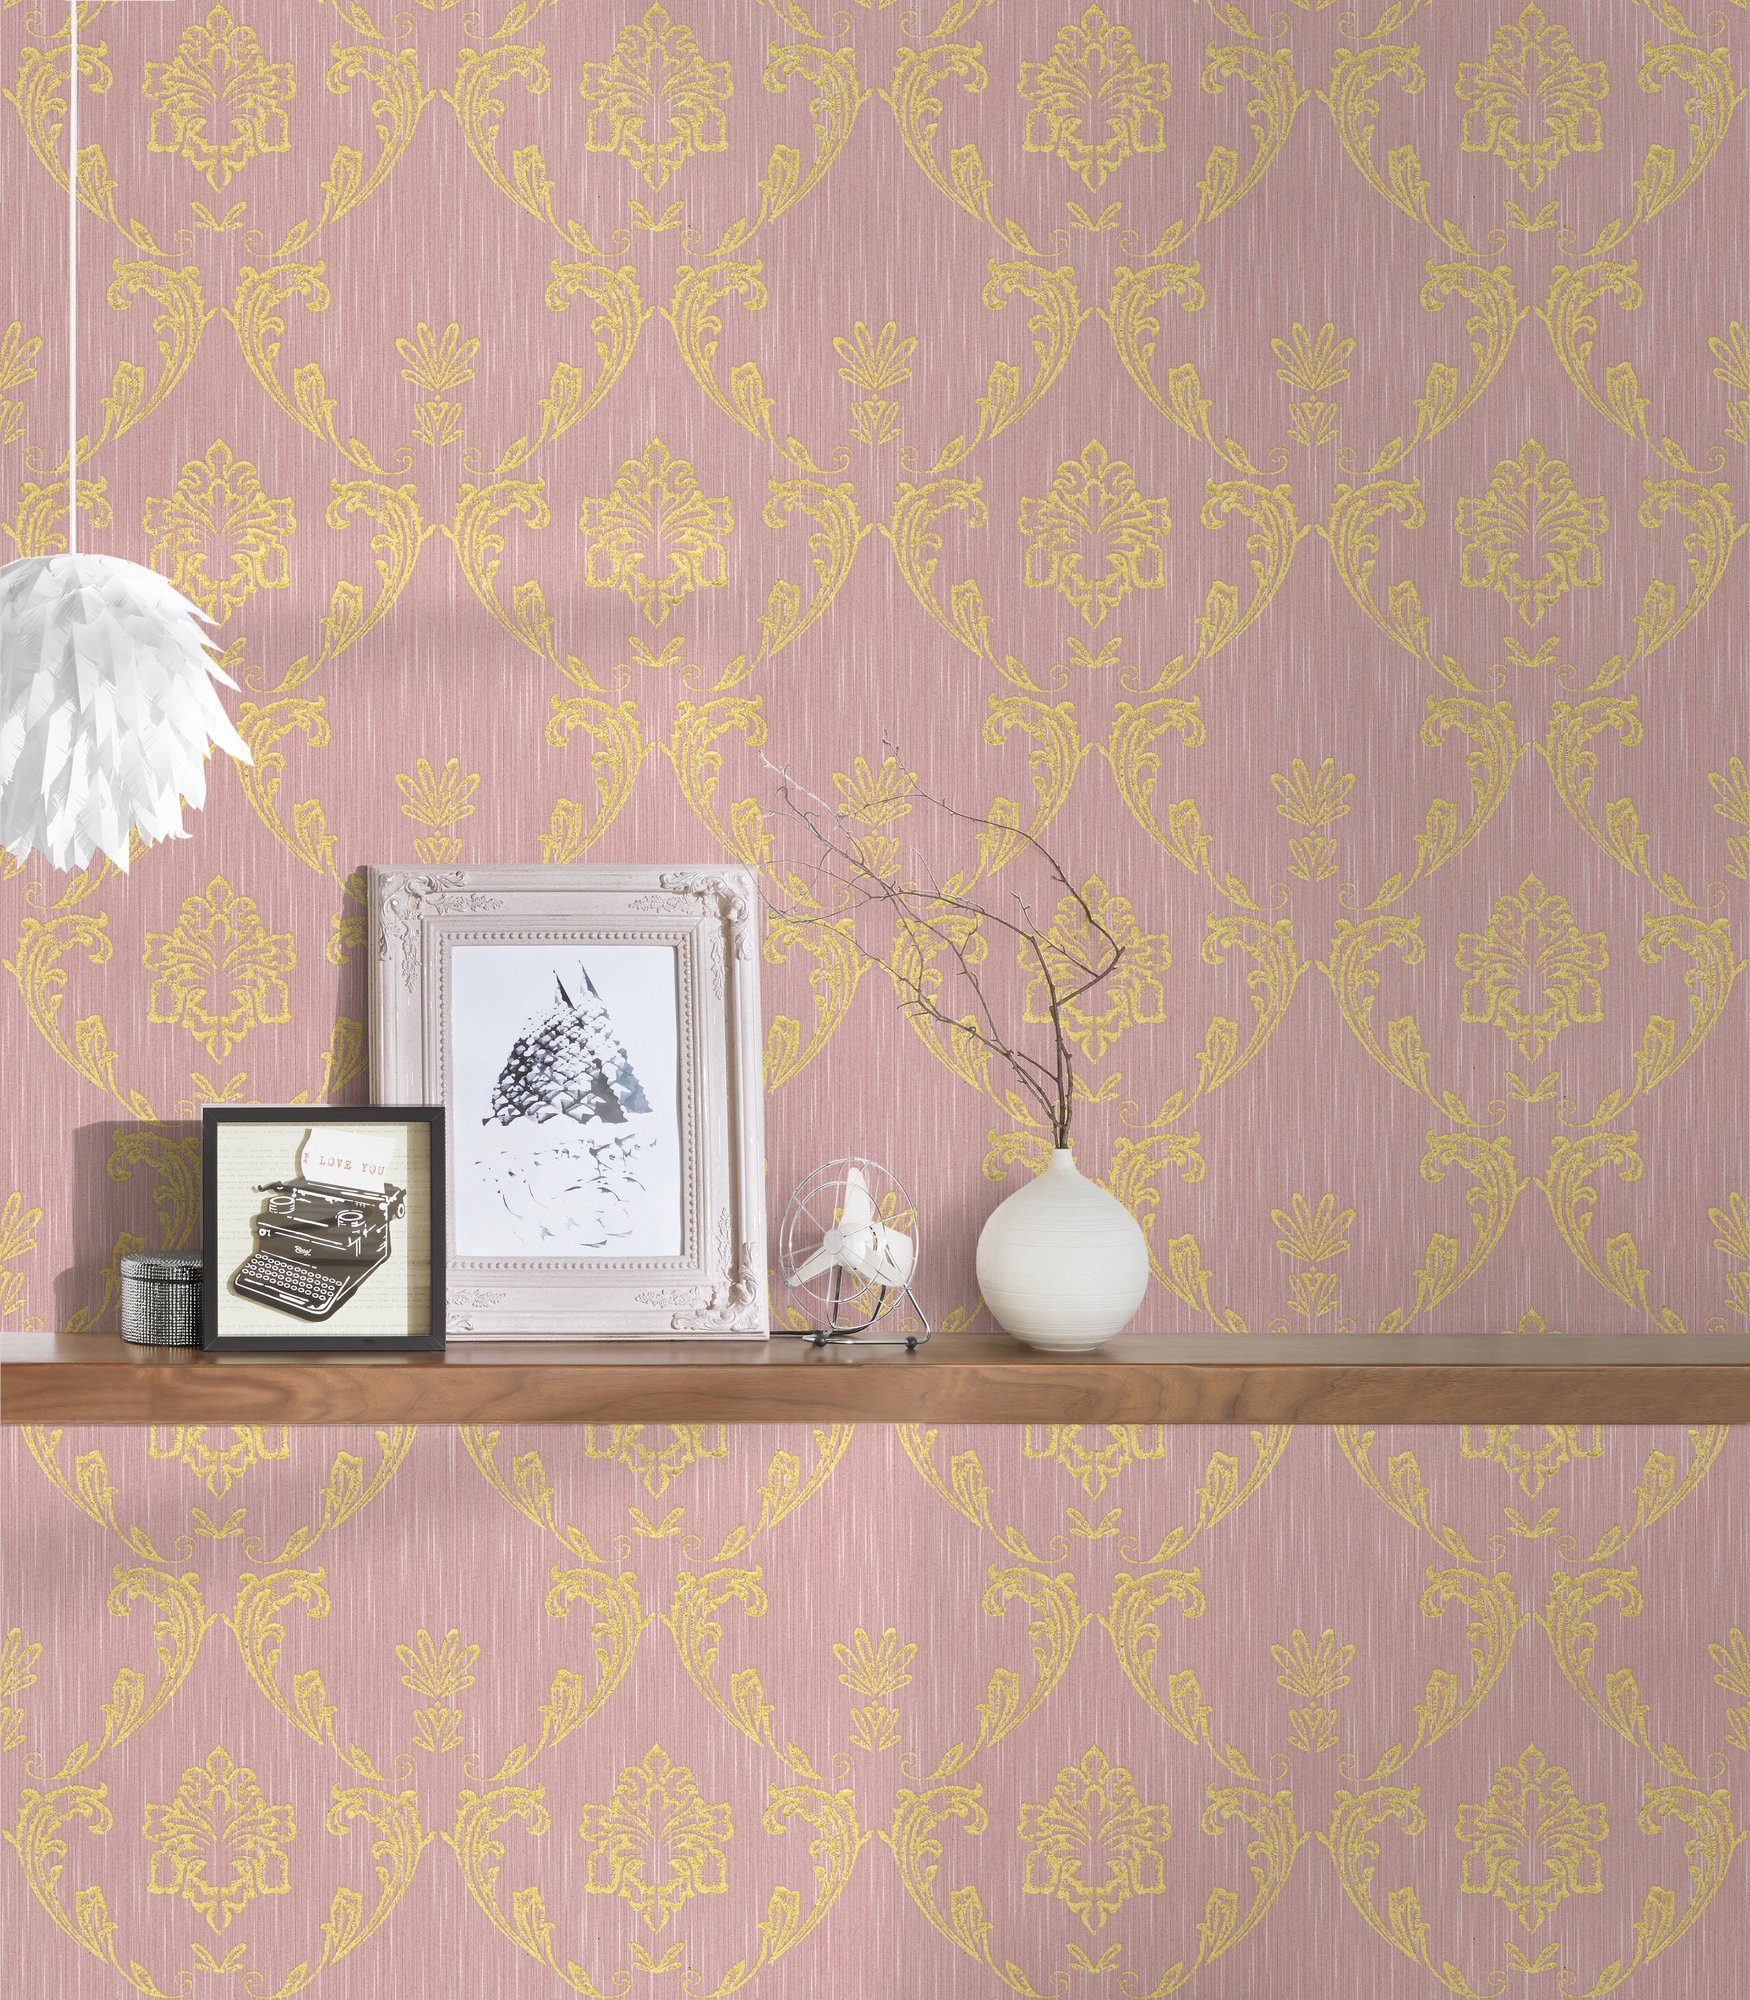 Architects Paper Textiltapete Metallic Ornament gold/rosa Silk, samtig, matt, Tapete Barock, Barock glänzend